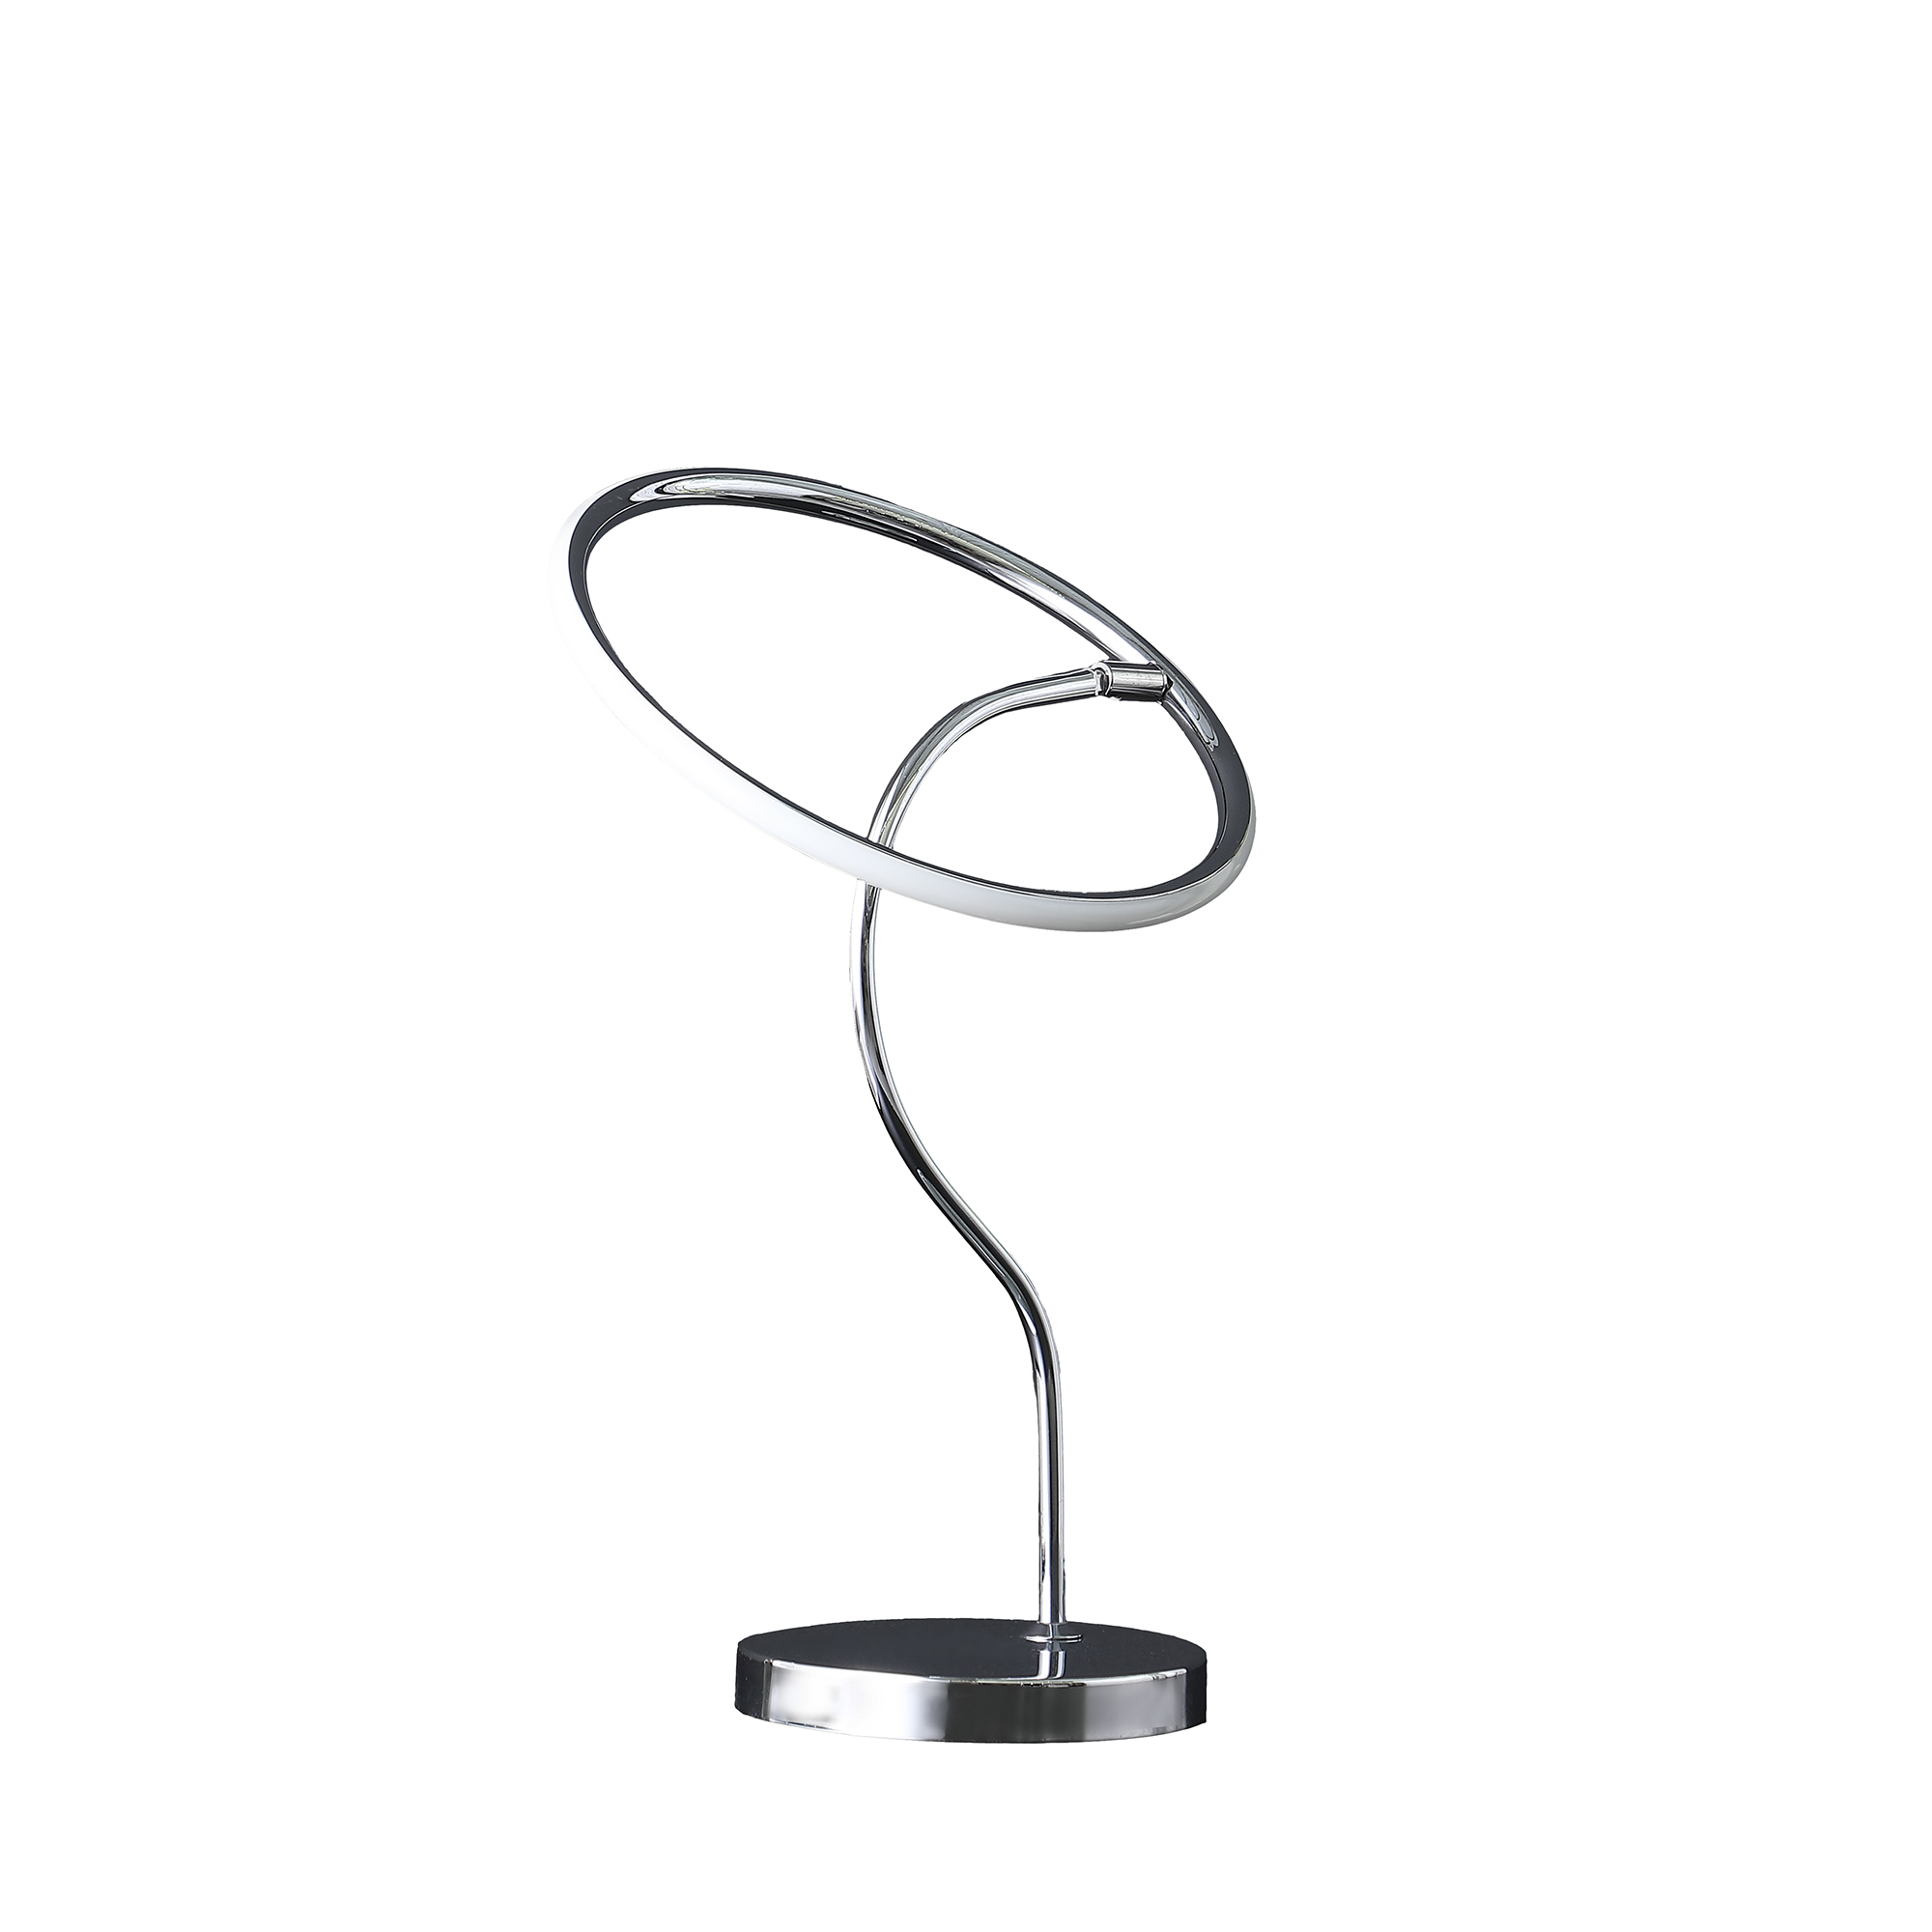 25.5″ in CIRCULAR HALO RING LED MODERN TABLE LAMP